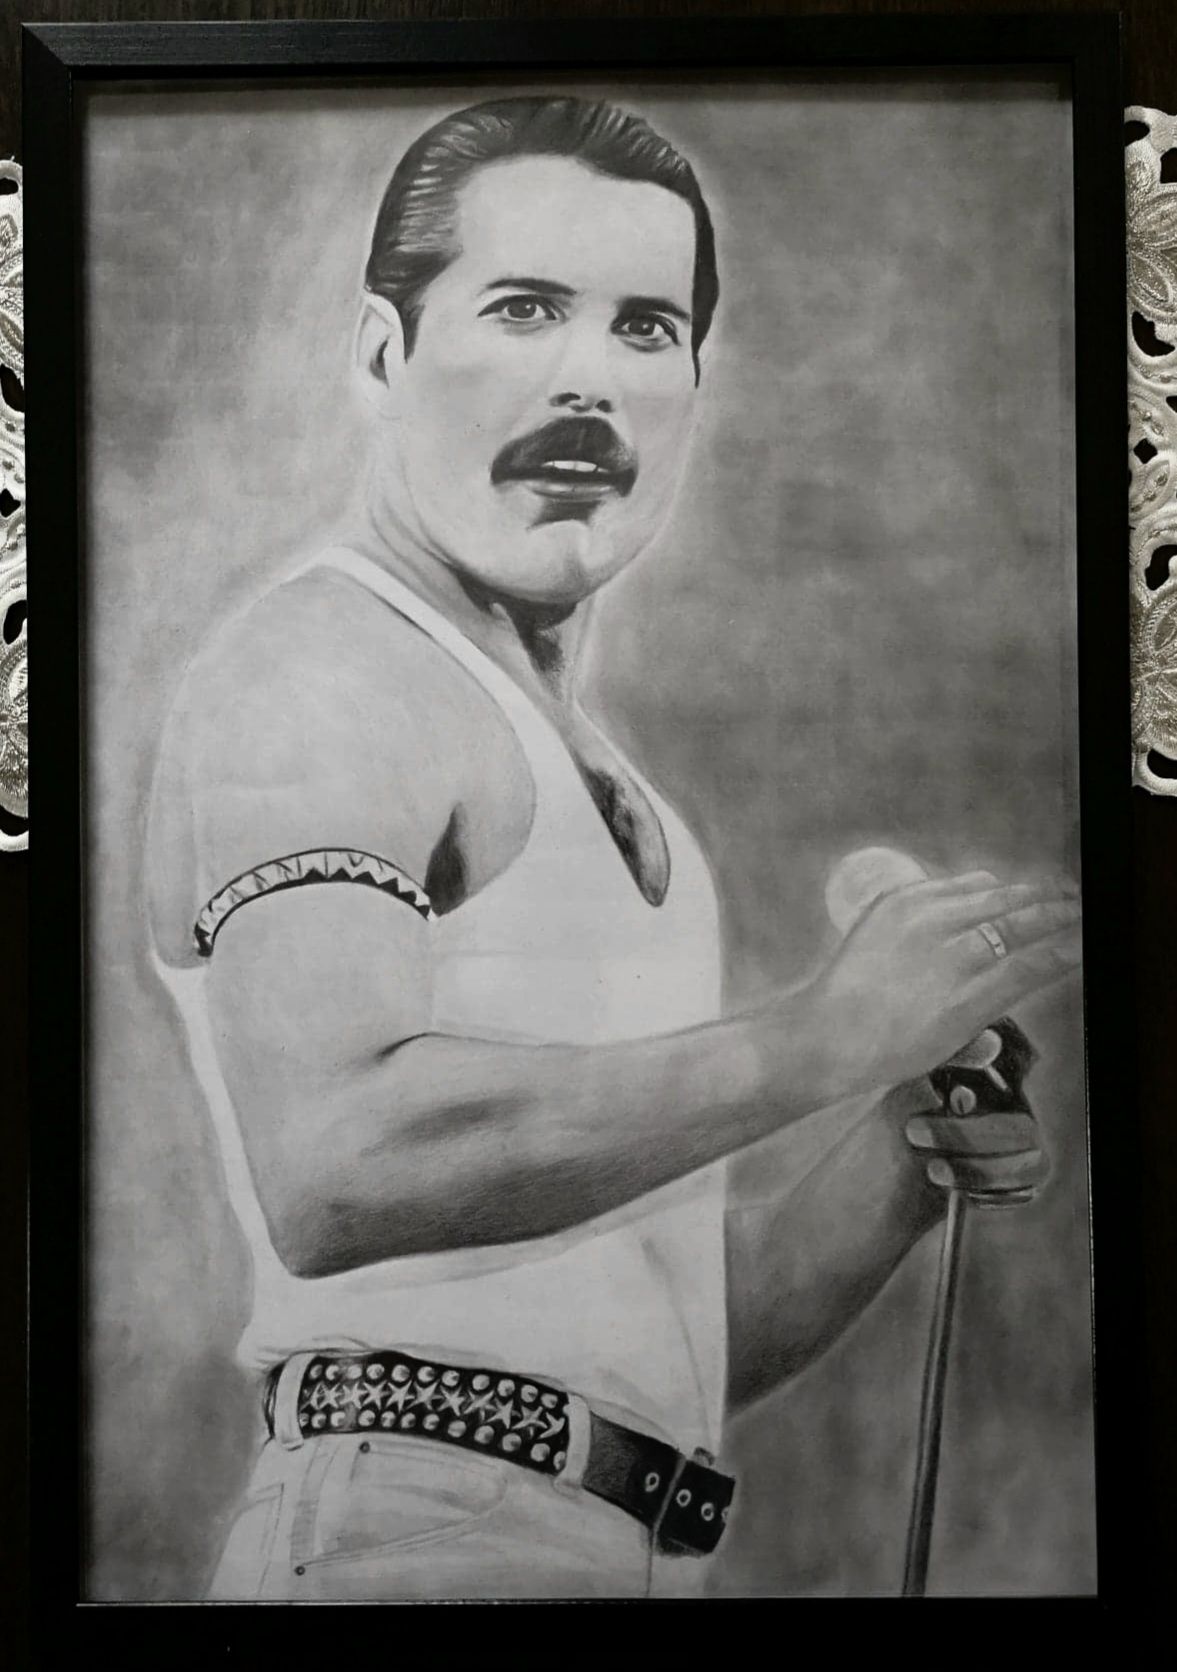 Rysunek Freddiego Mercury